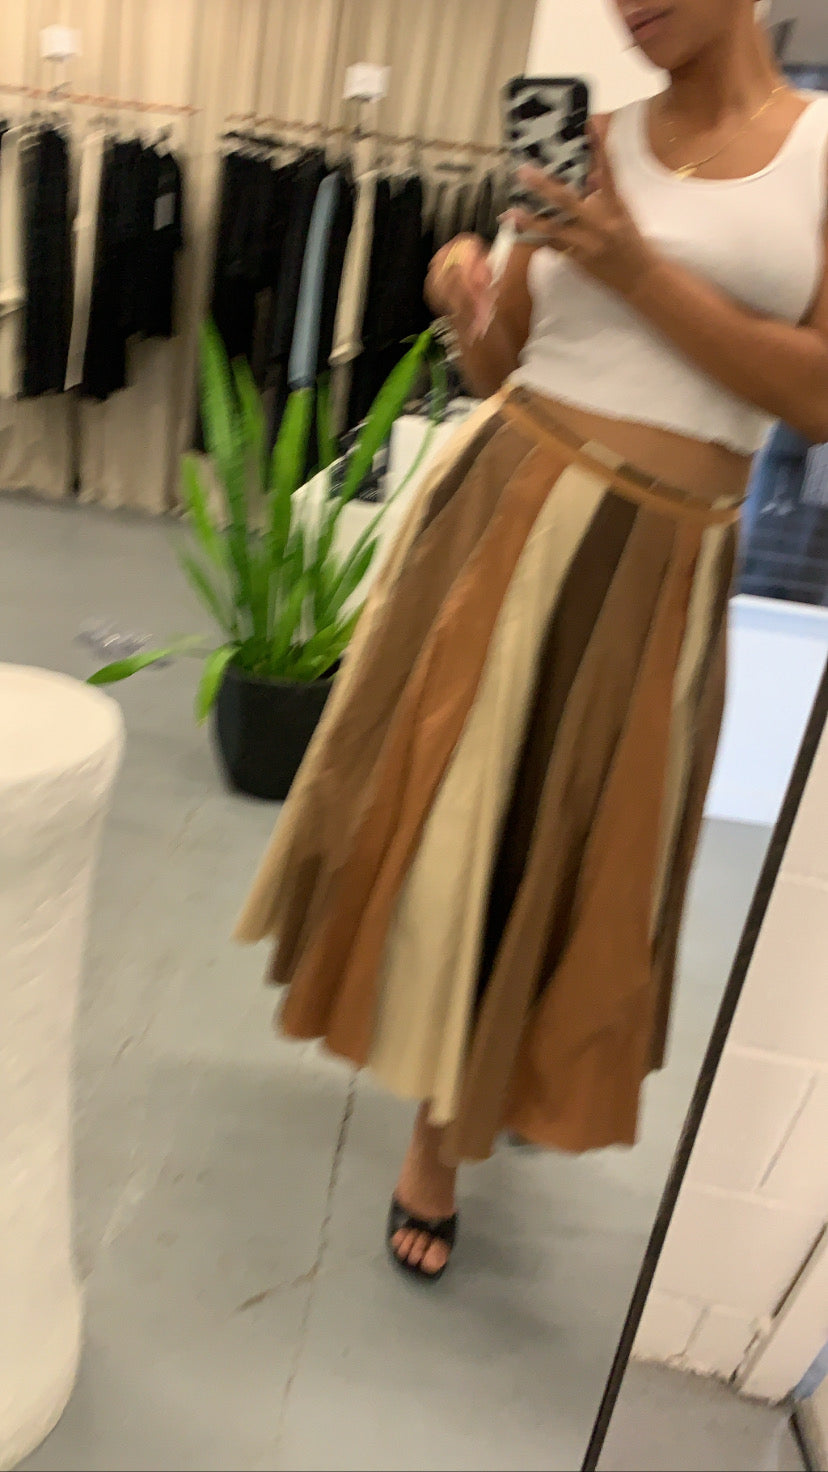 Hues of Brown Flared Skirt